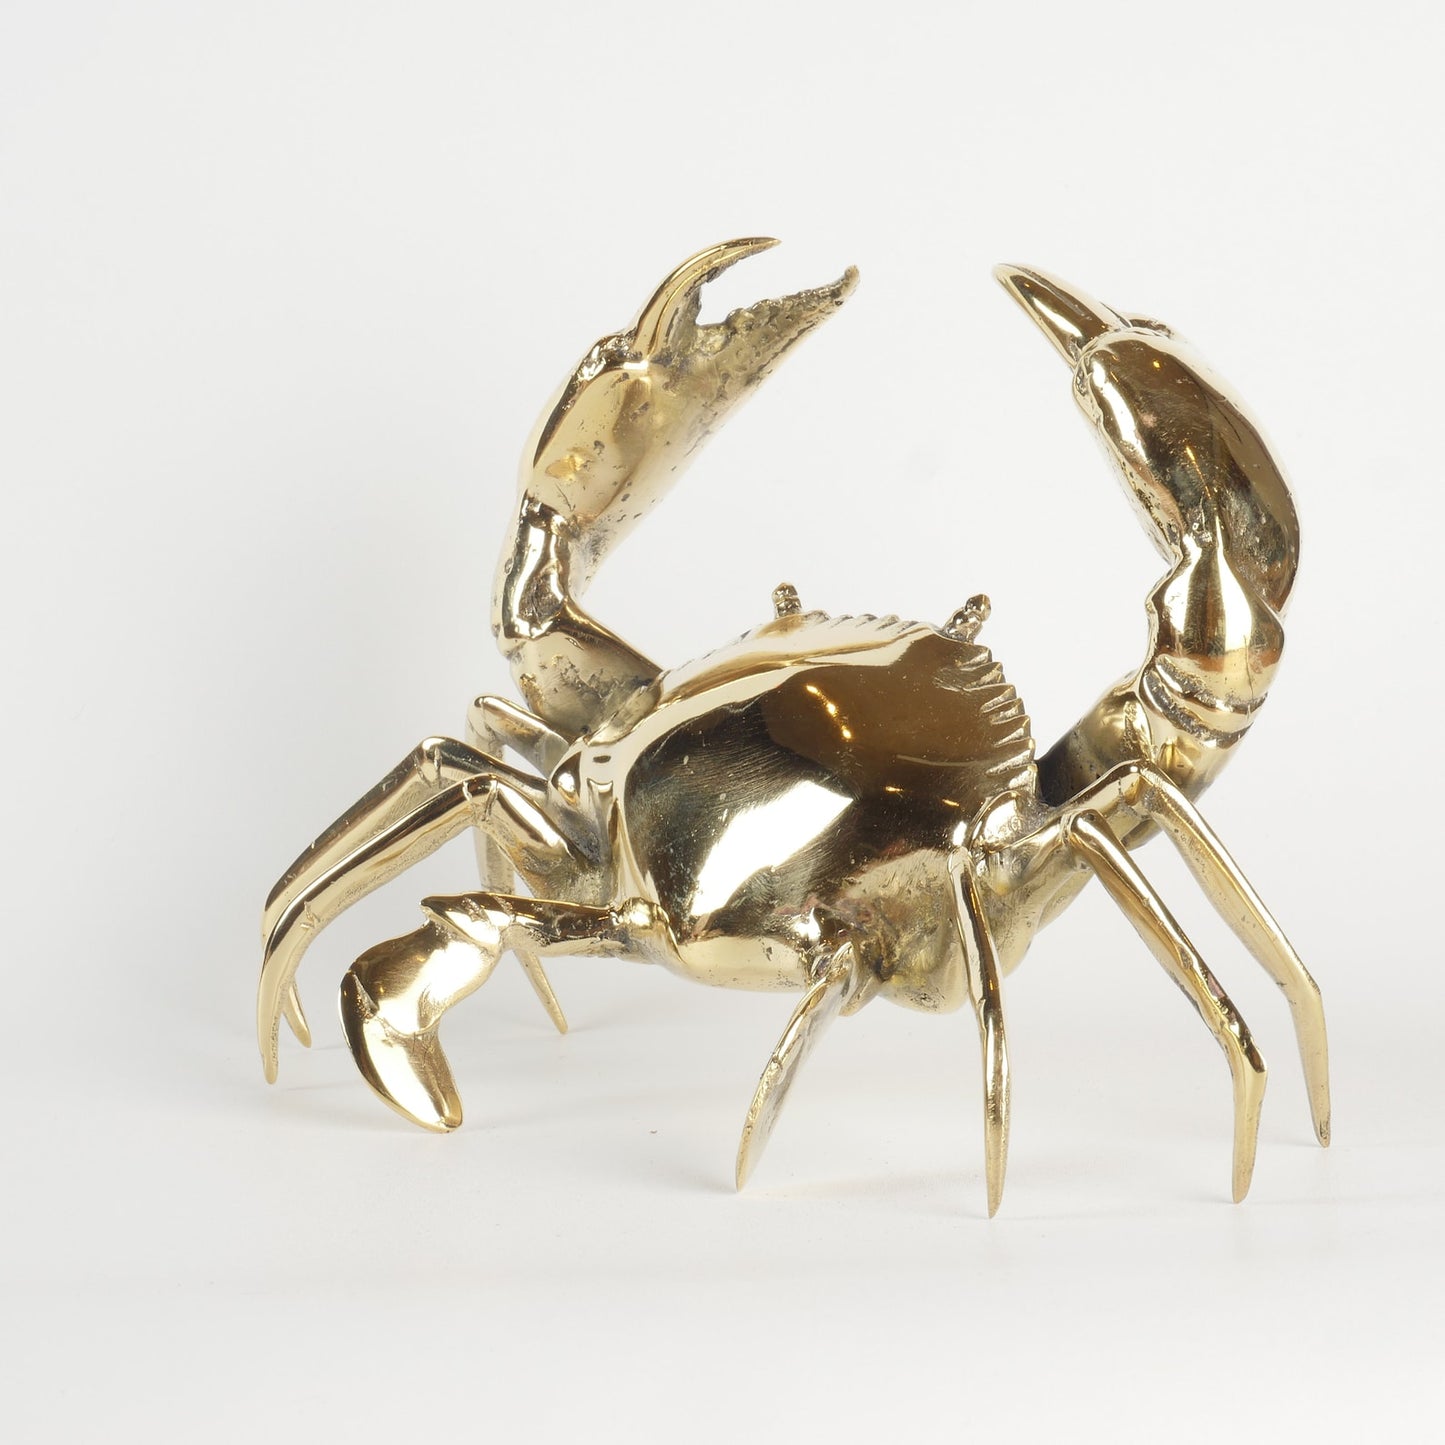 Handmade Crab Brass Figure Statue Decor